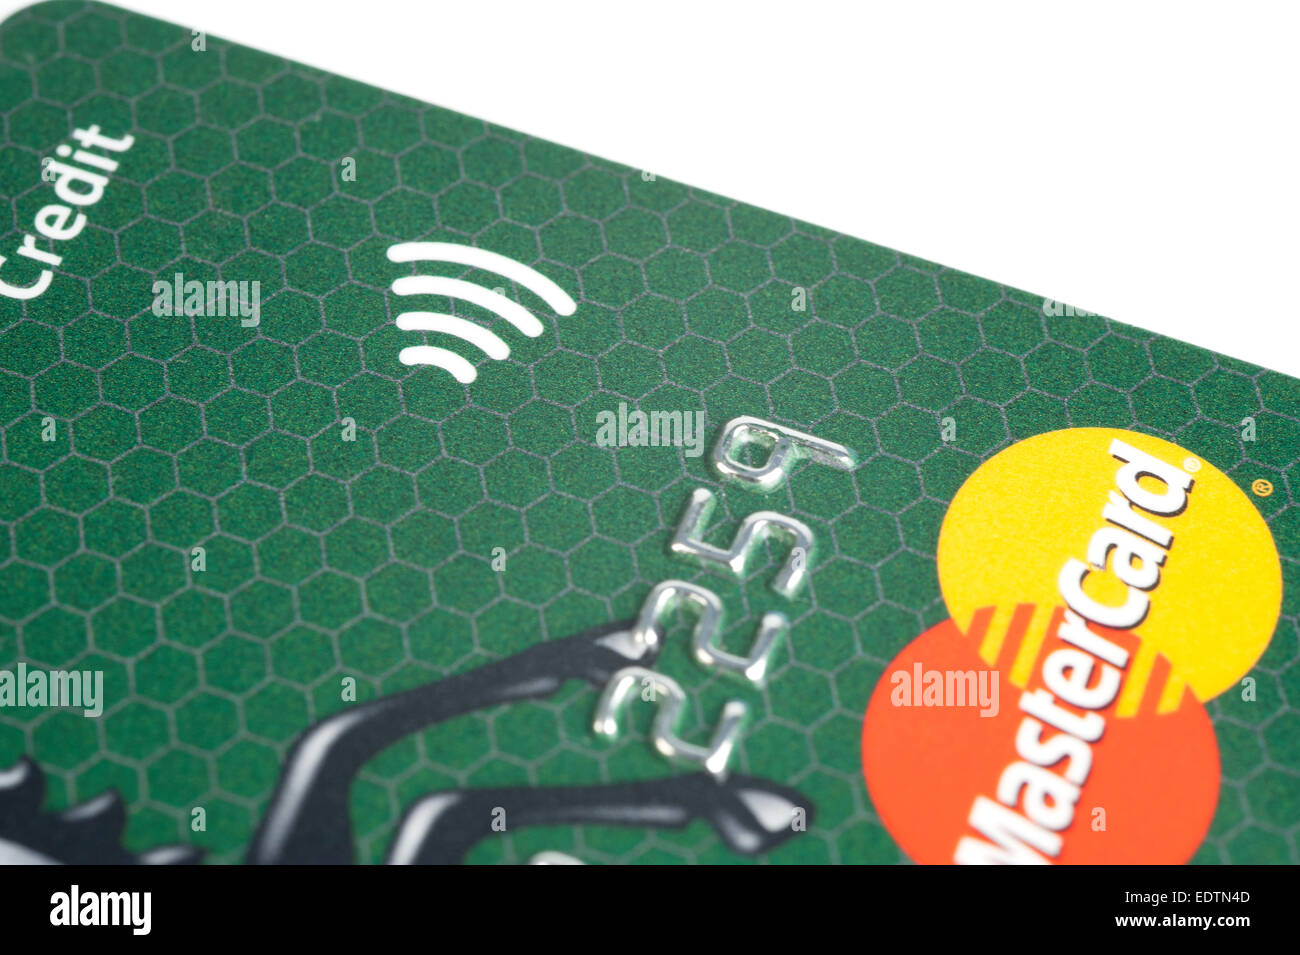 Mastercard contactless credit card close-up detail Stock Photo